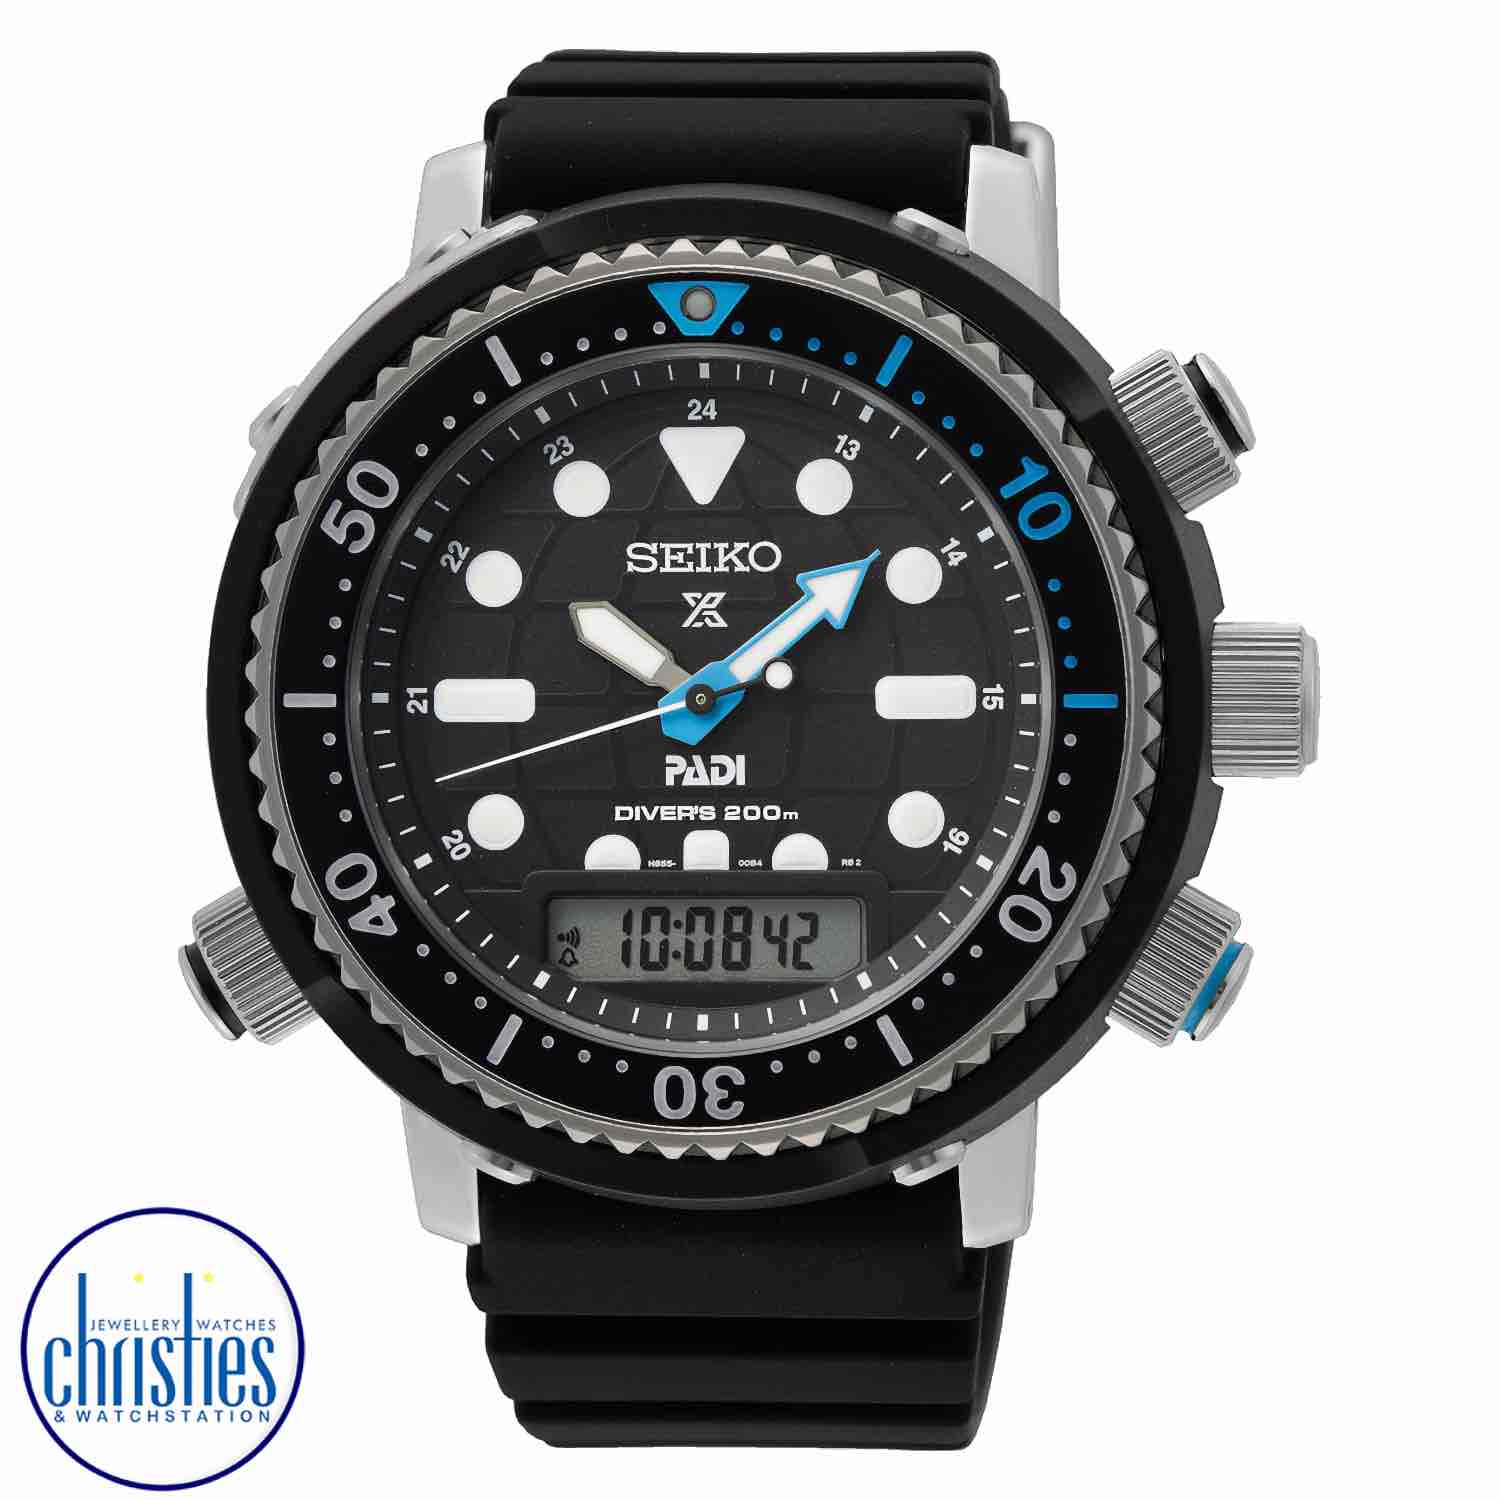 SNJ035P1 Seiko Prospex PADI Arnie  Hybrid Divers 40th Anniversary Watch seiko nz